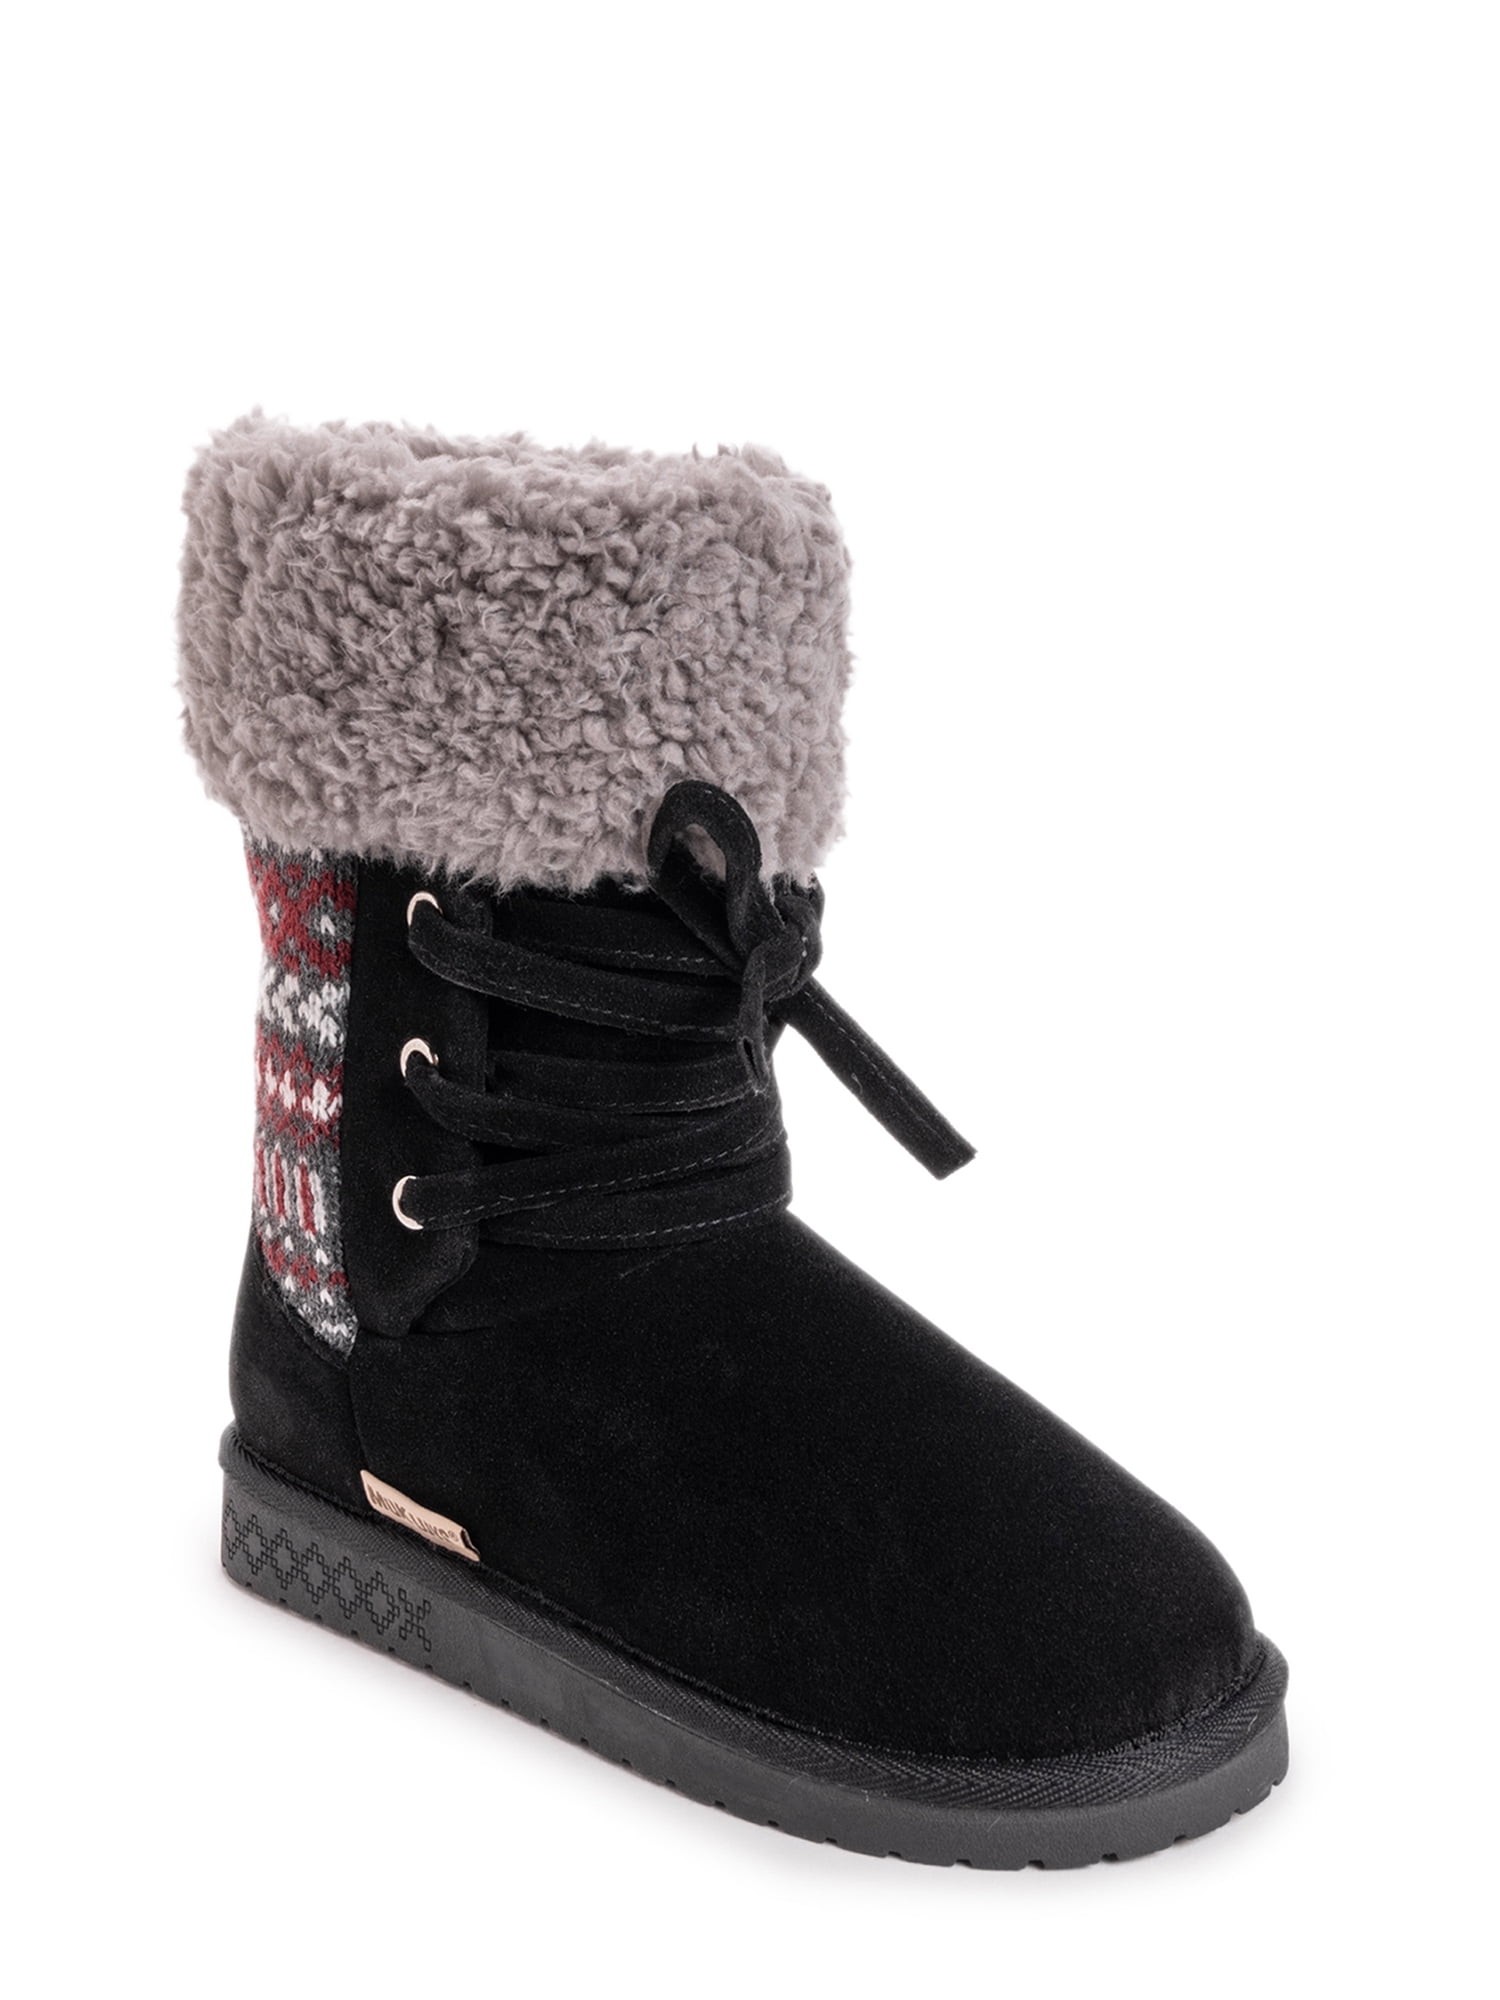 Buy > muk luks faux fur boots > in stock